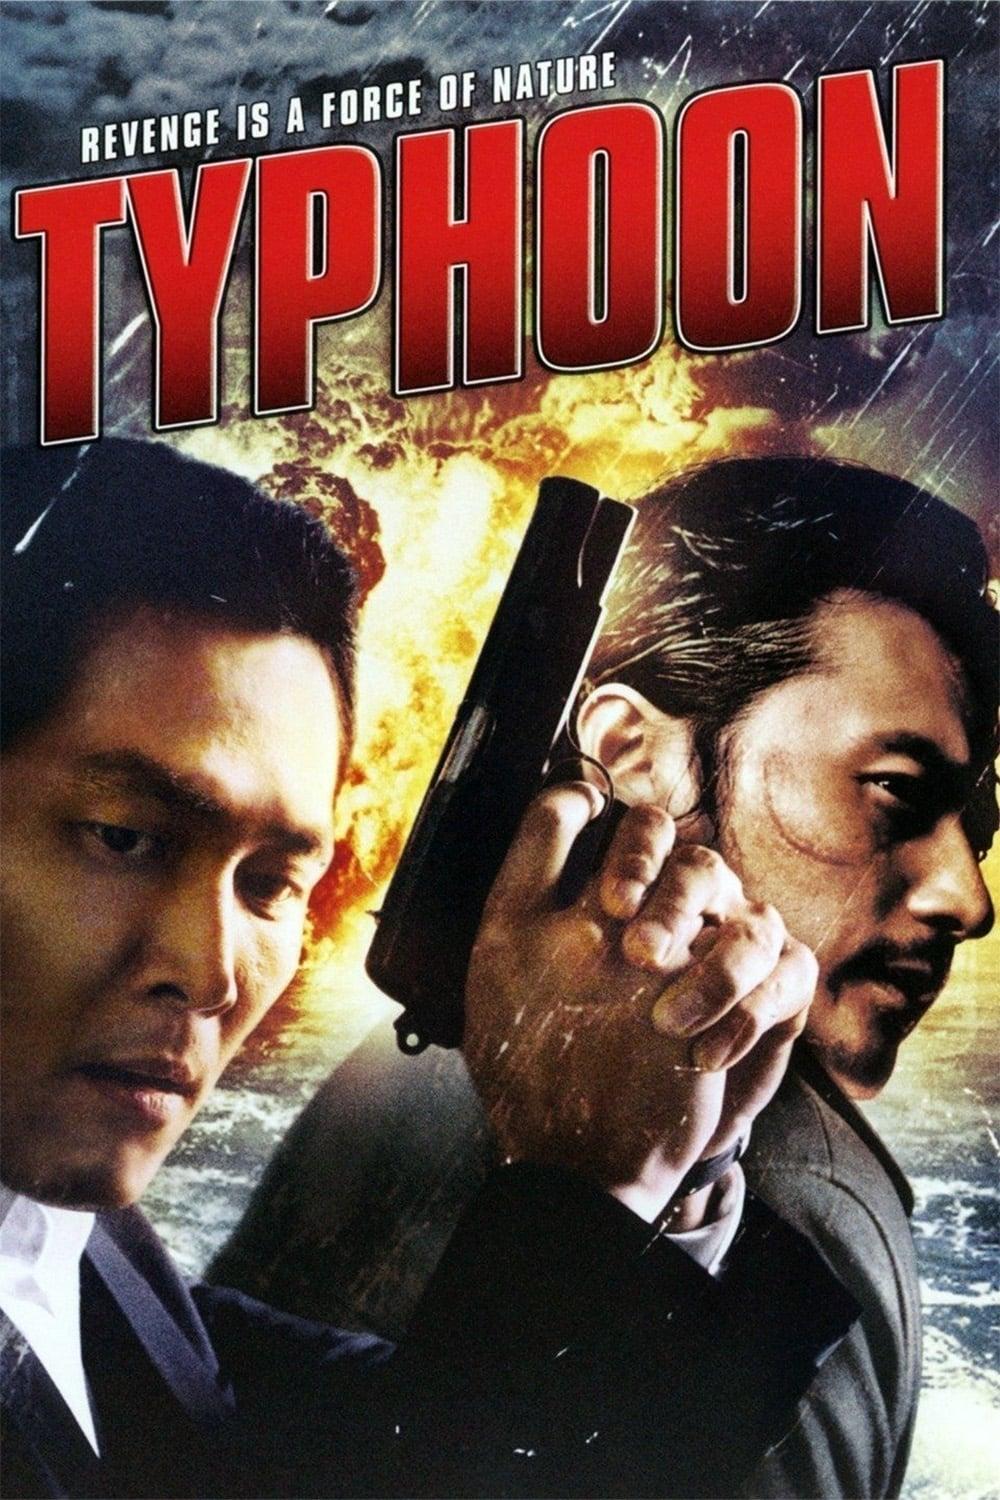 Typhoon poster